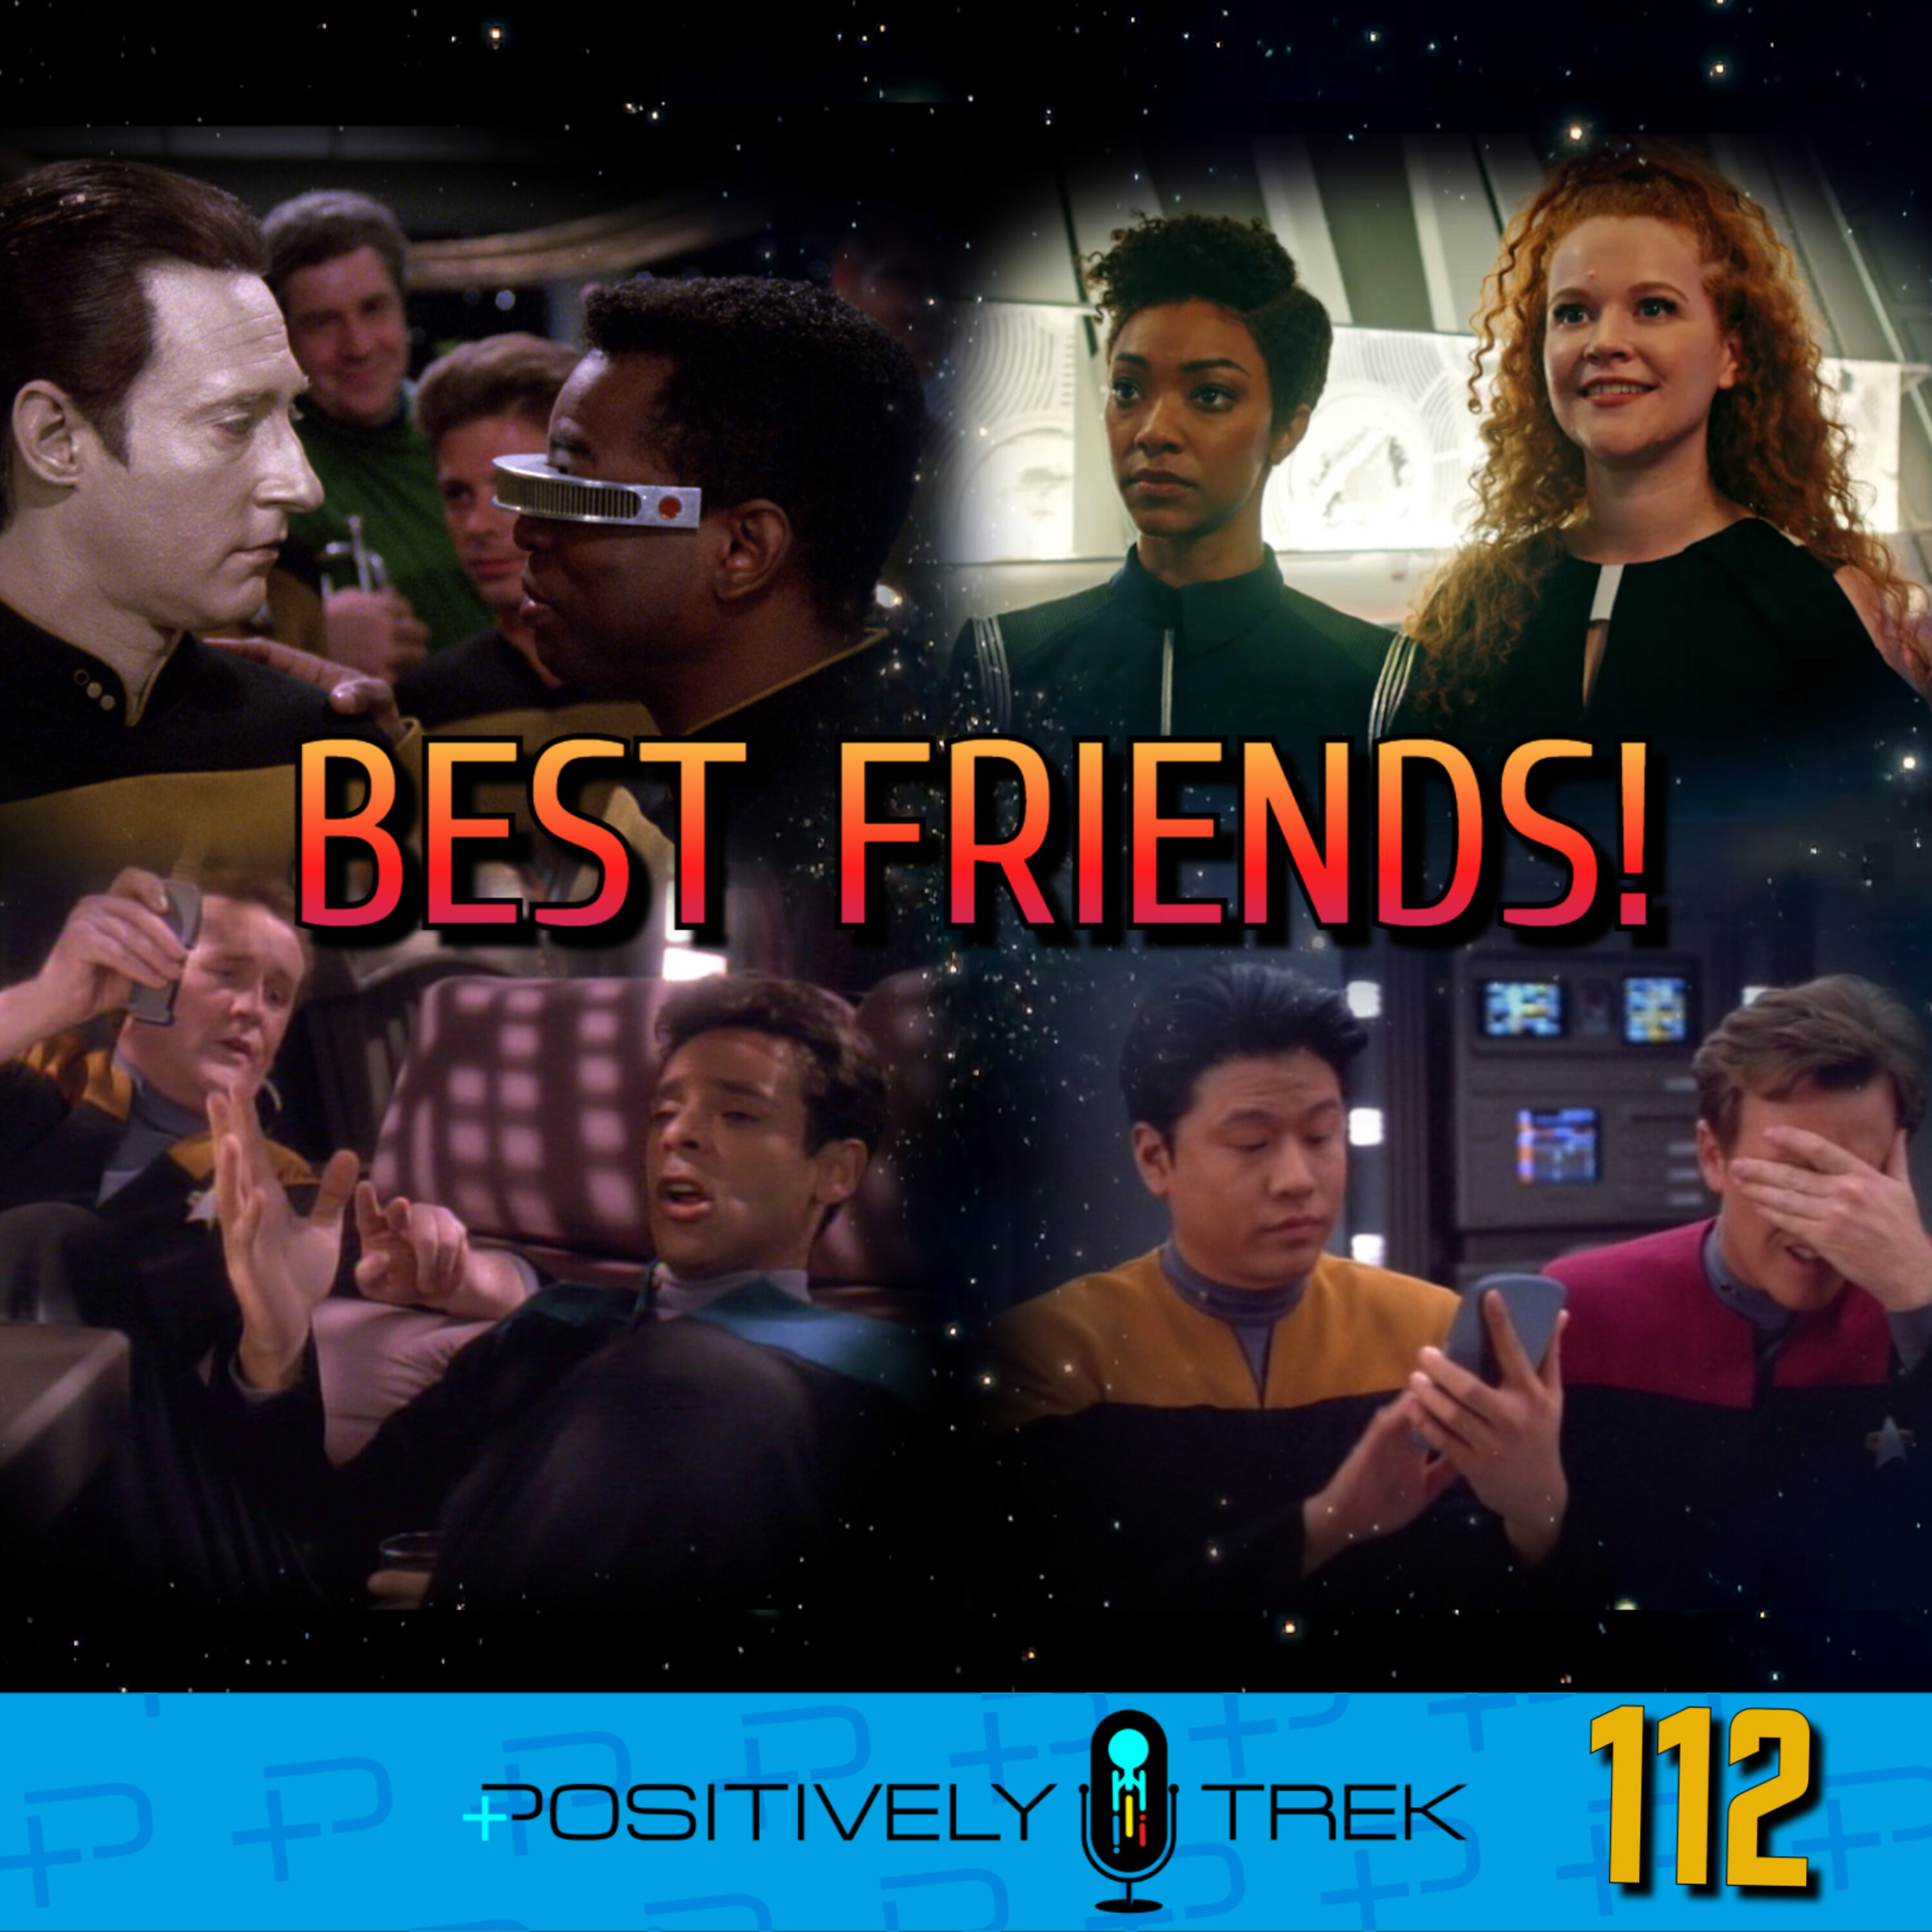 Star Trek’s Best Friendships! Image